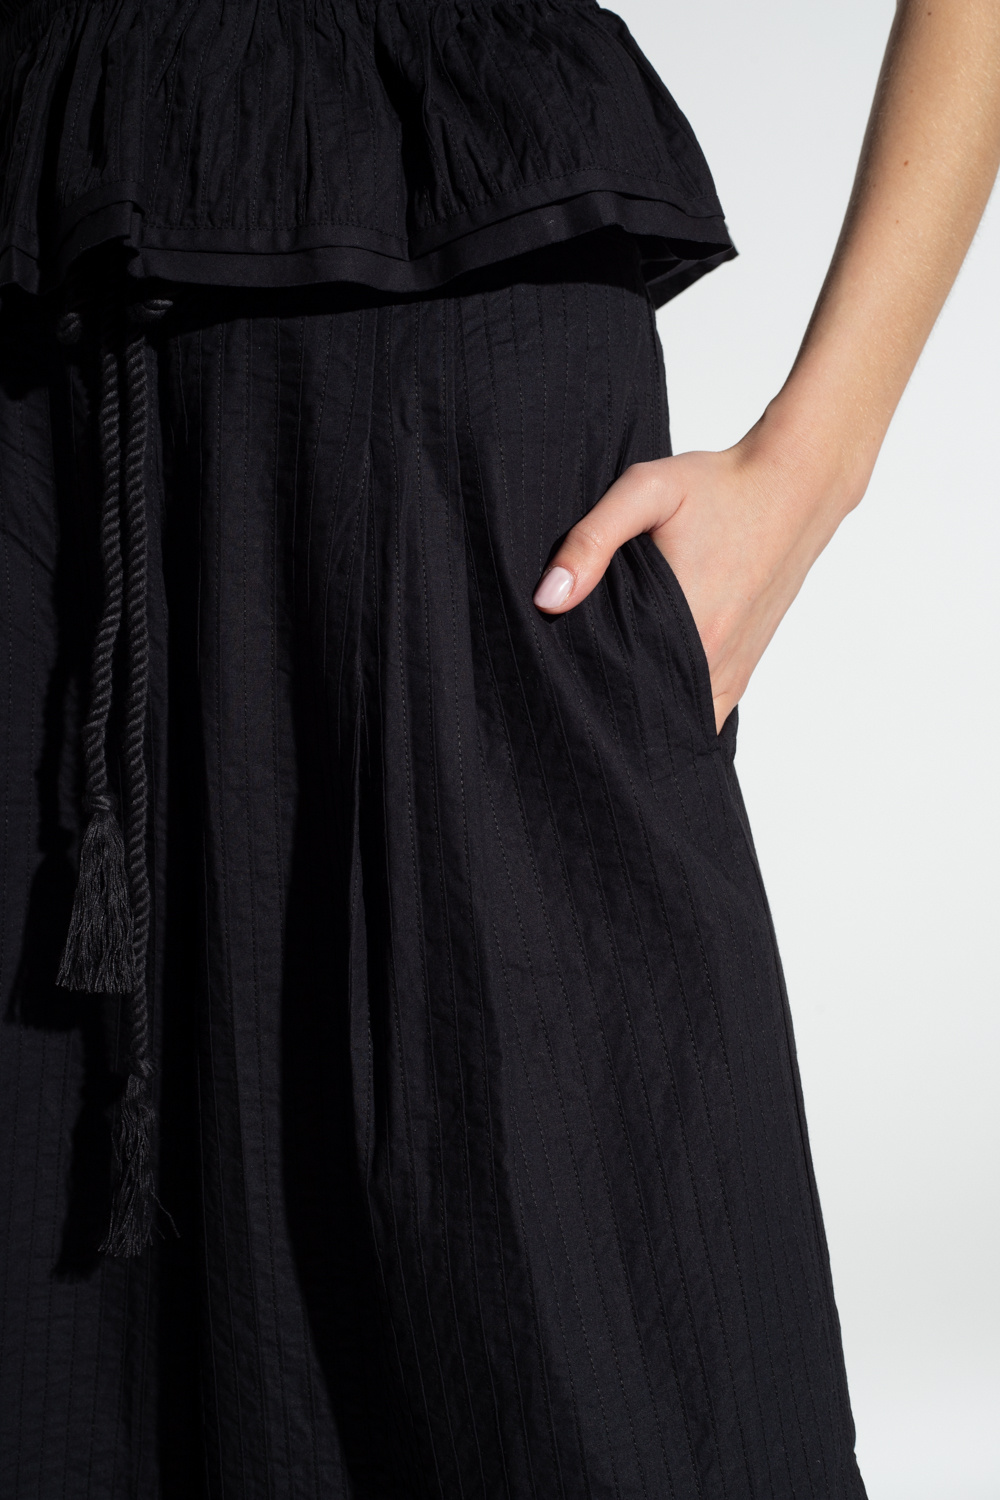 Eloise Maxi Skirt Black, Tulle Layered Maxi